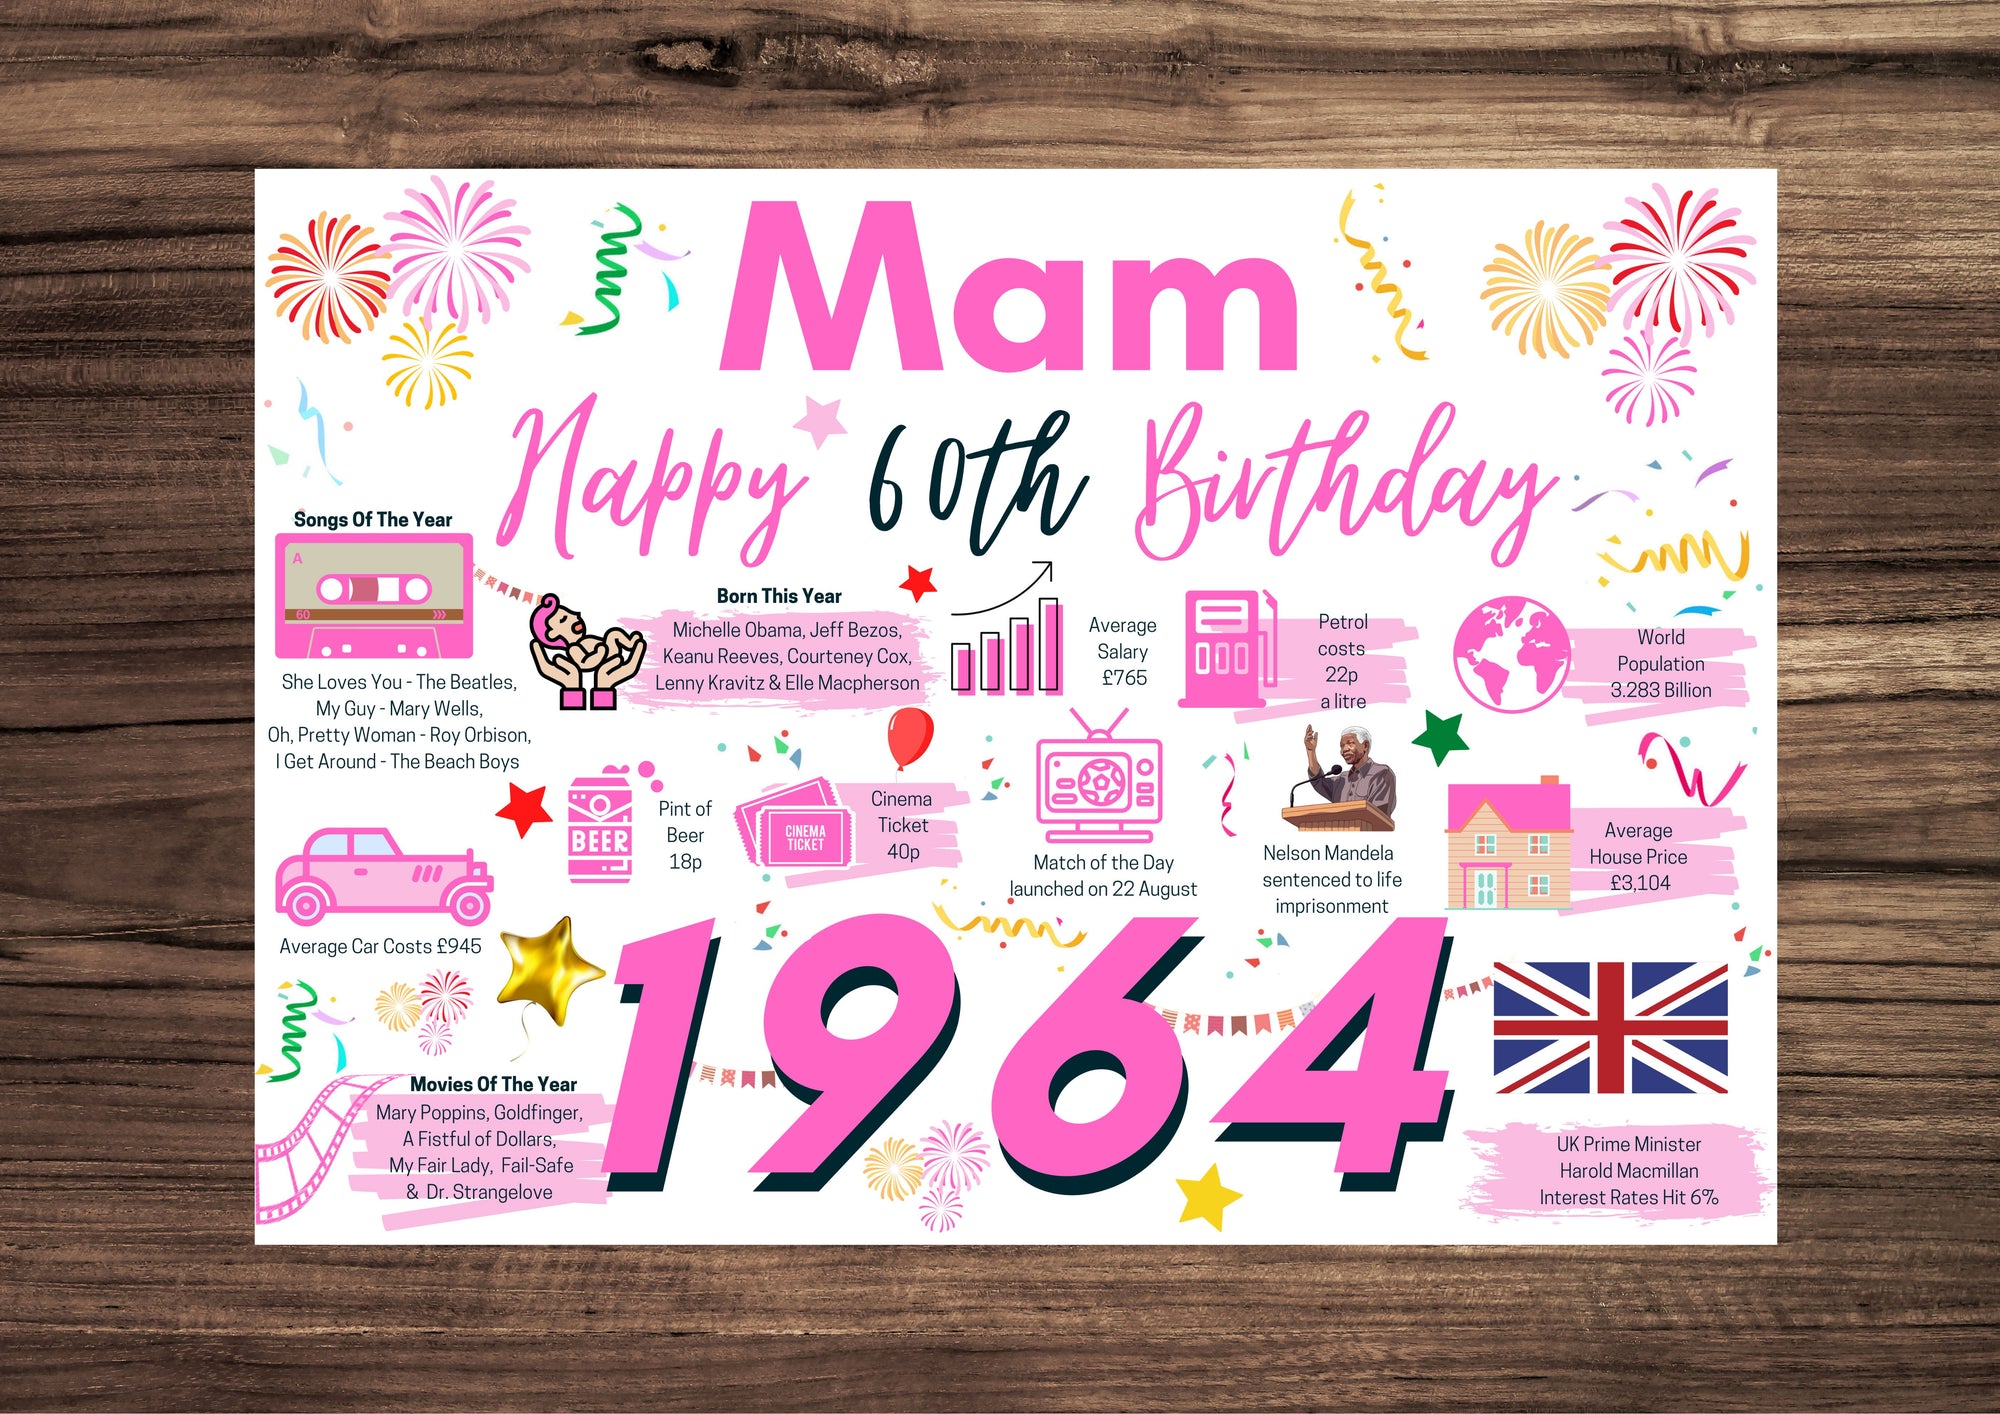 60th Birthday Card For Mam, Born In 1964 Facts Milestone